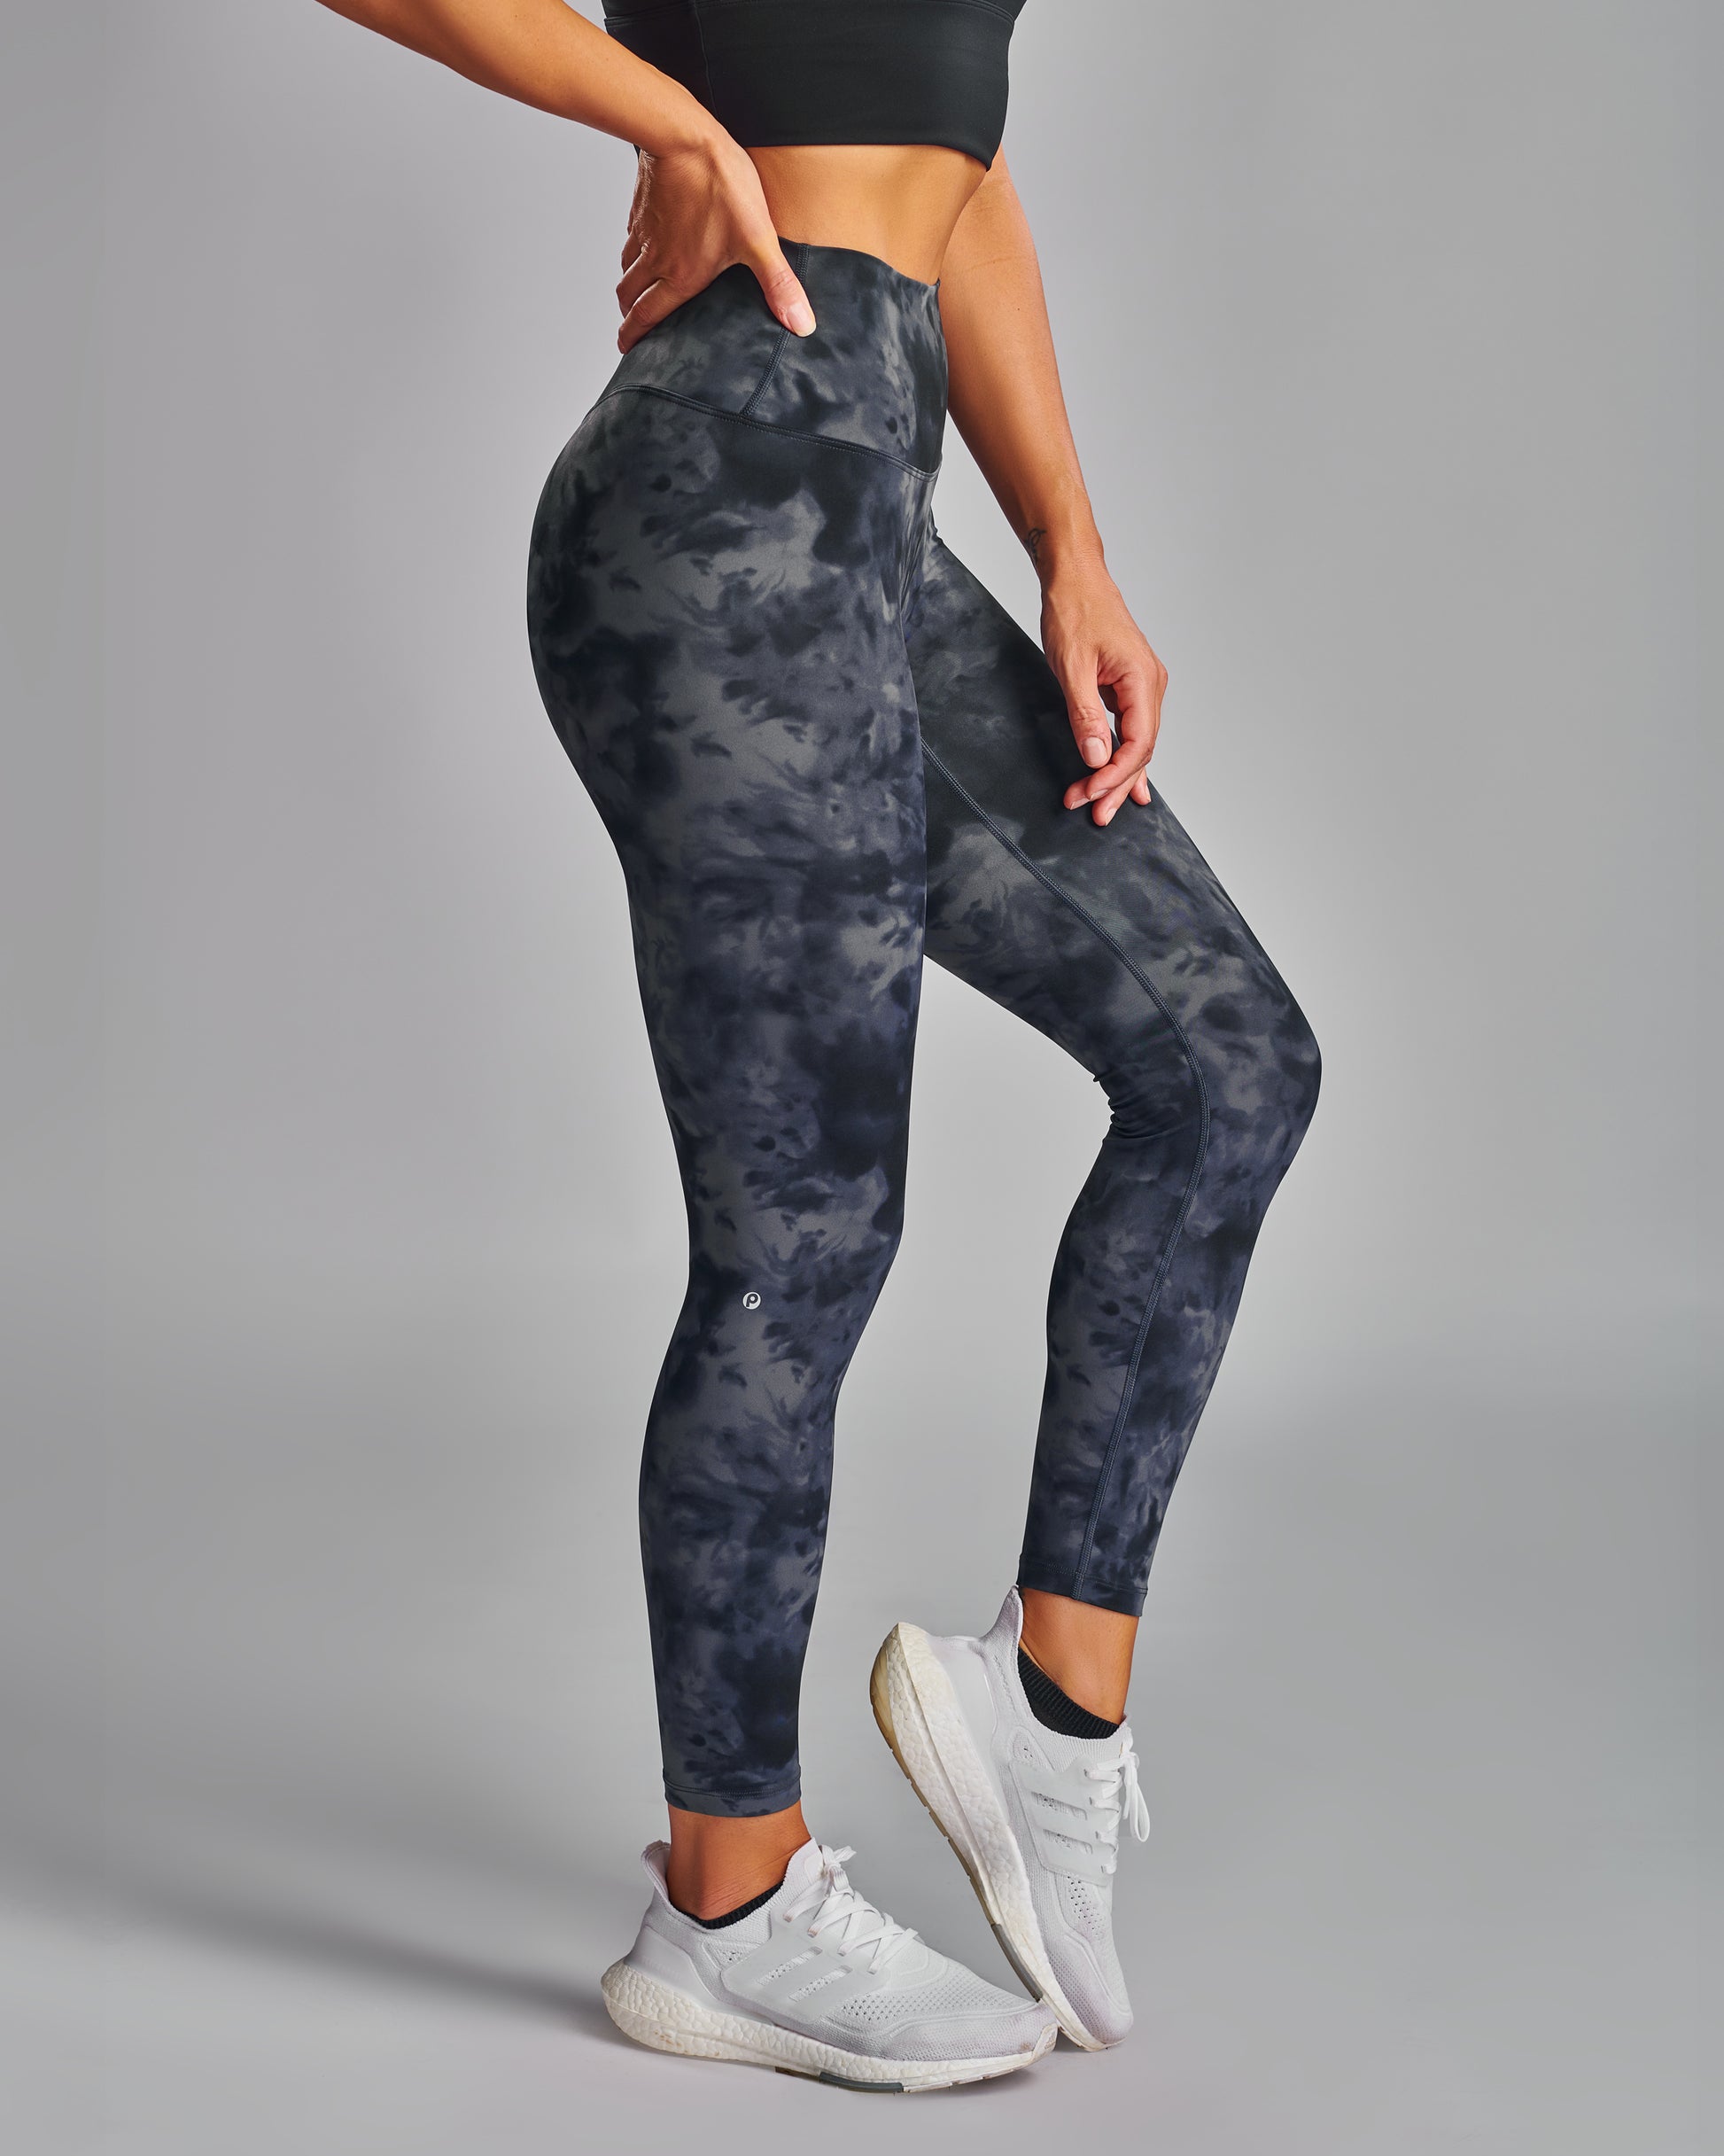 Align Leggings. Grey Tie Dye Print Ultralux fabric. – Pineapple Athleisure